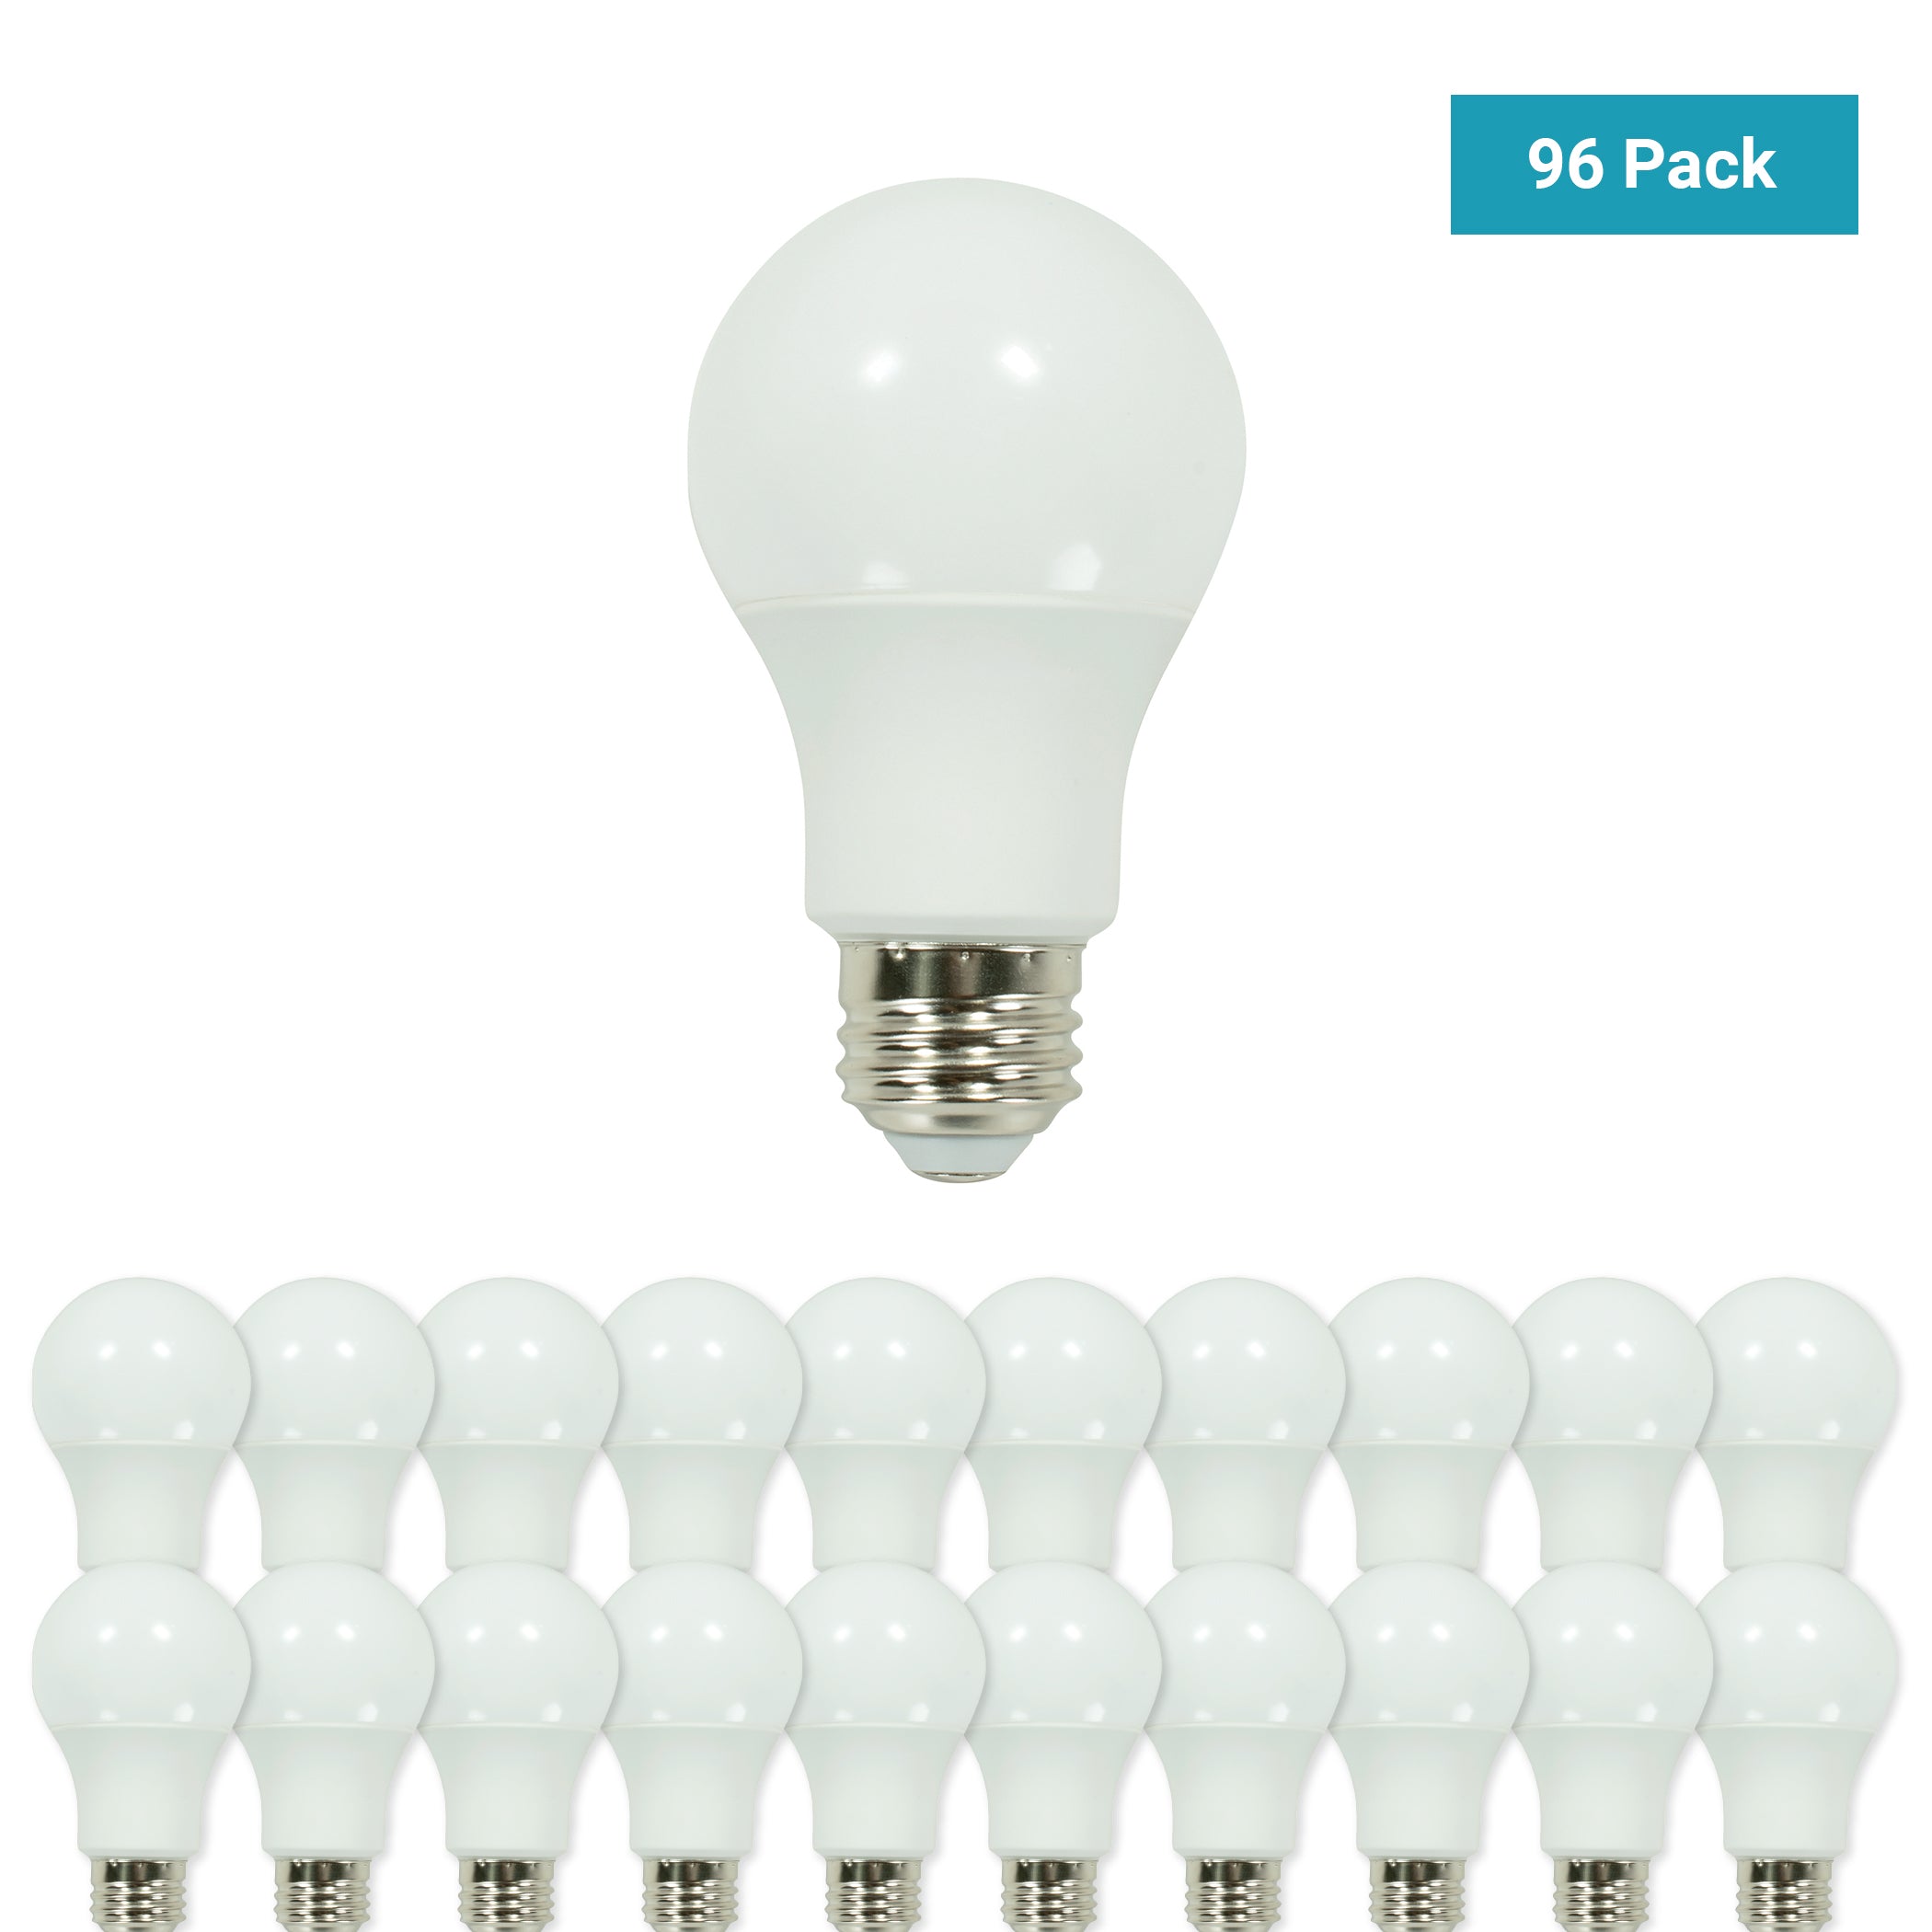 1500 Lumen LED A19 Bulb, 15-Watt, 100-Watt Equivalent E26, 16-Pack